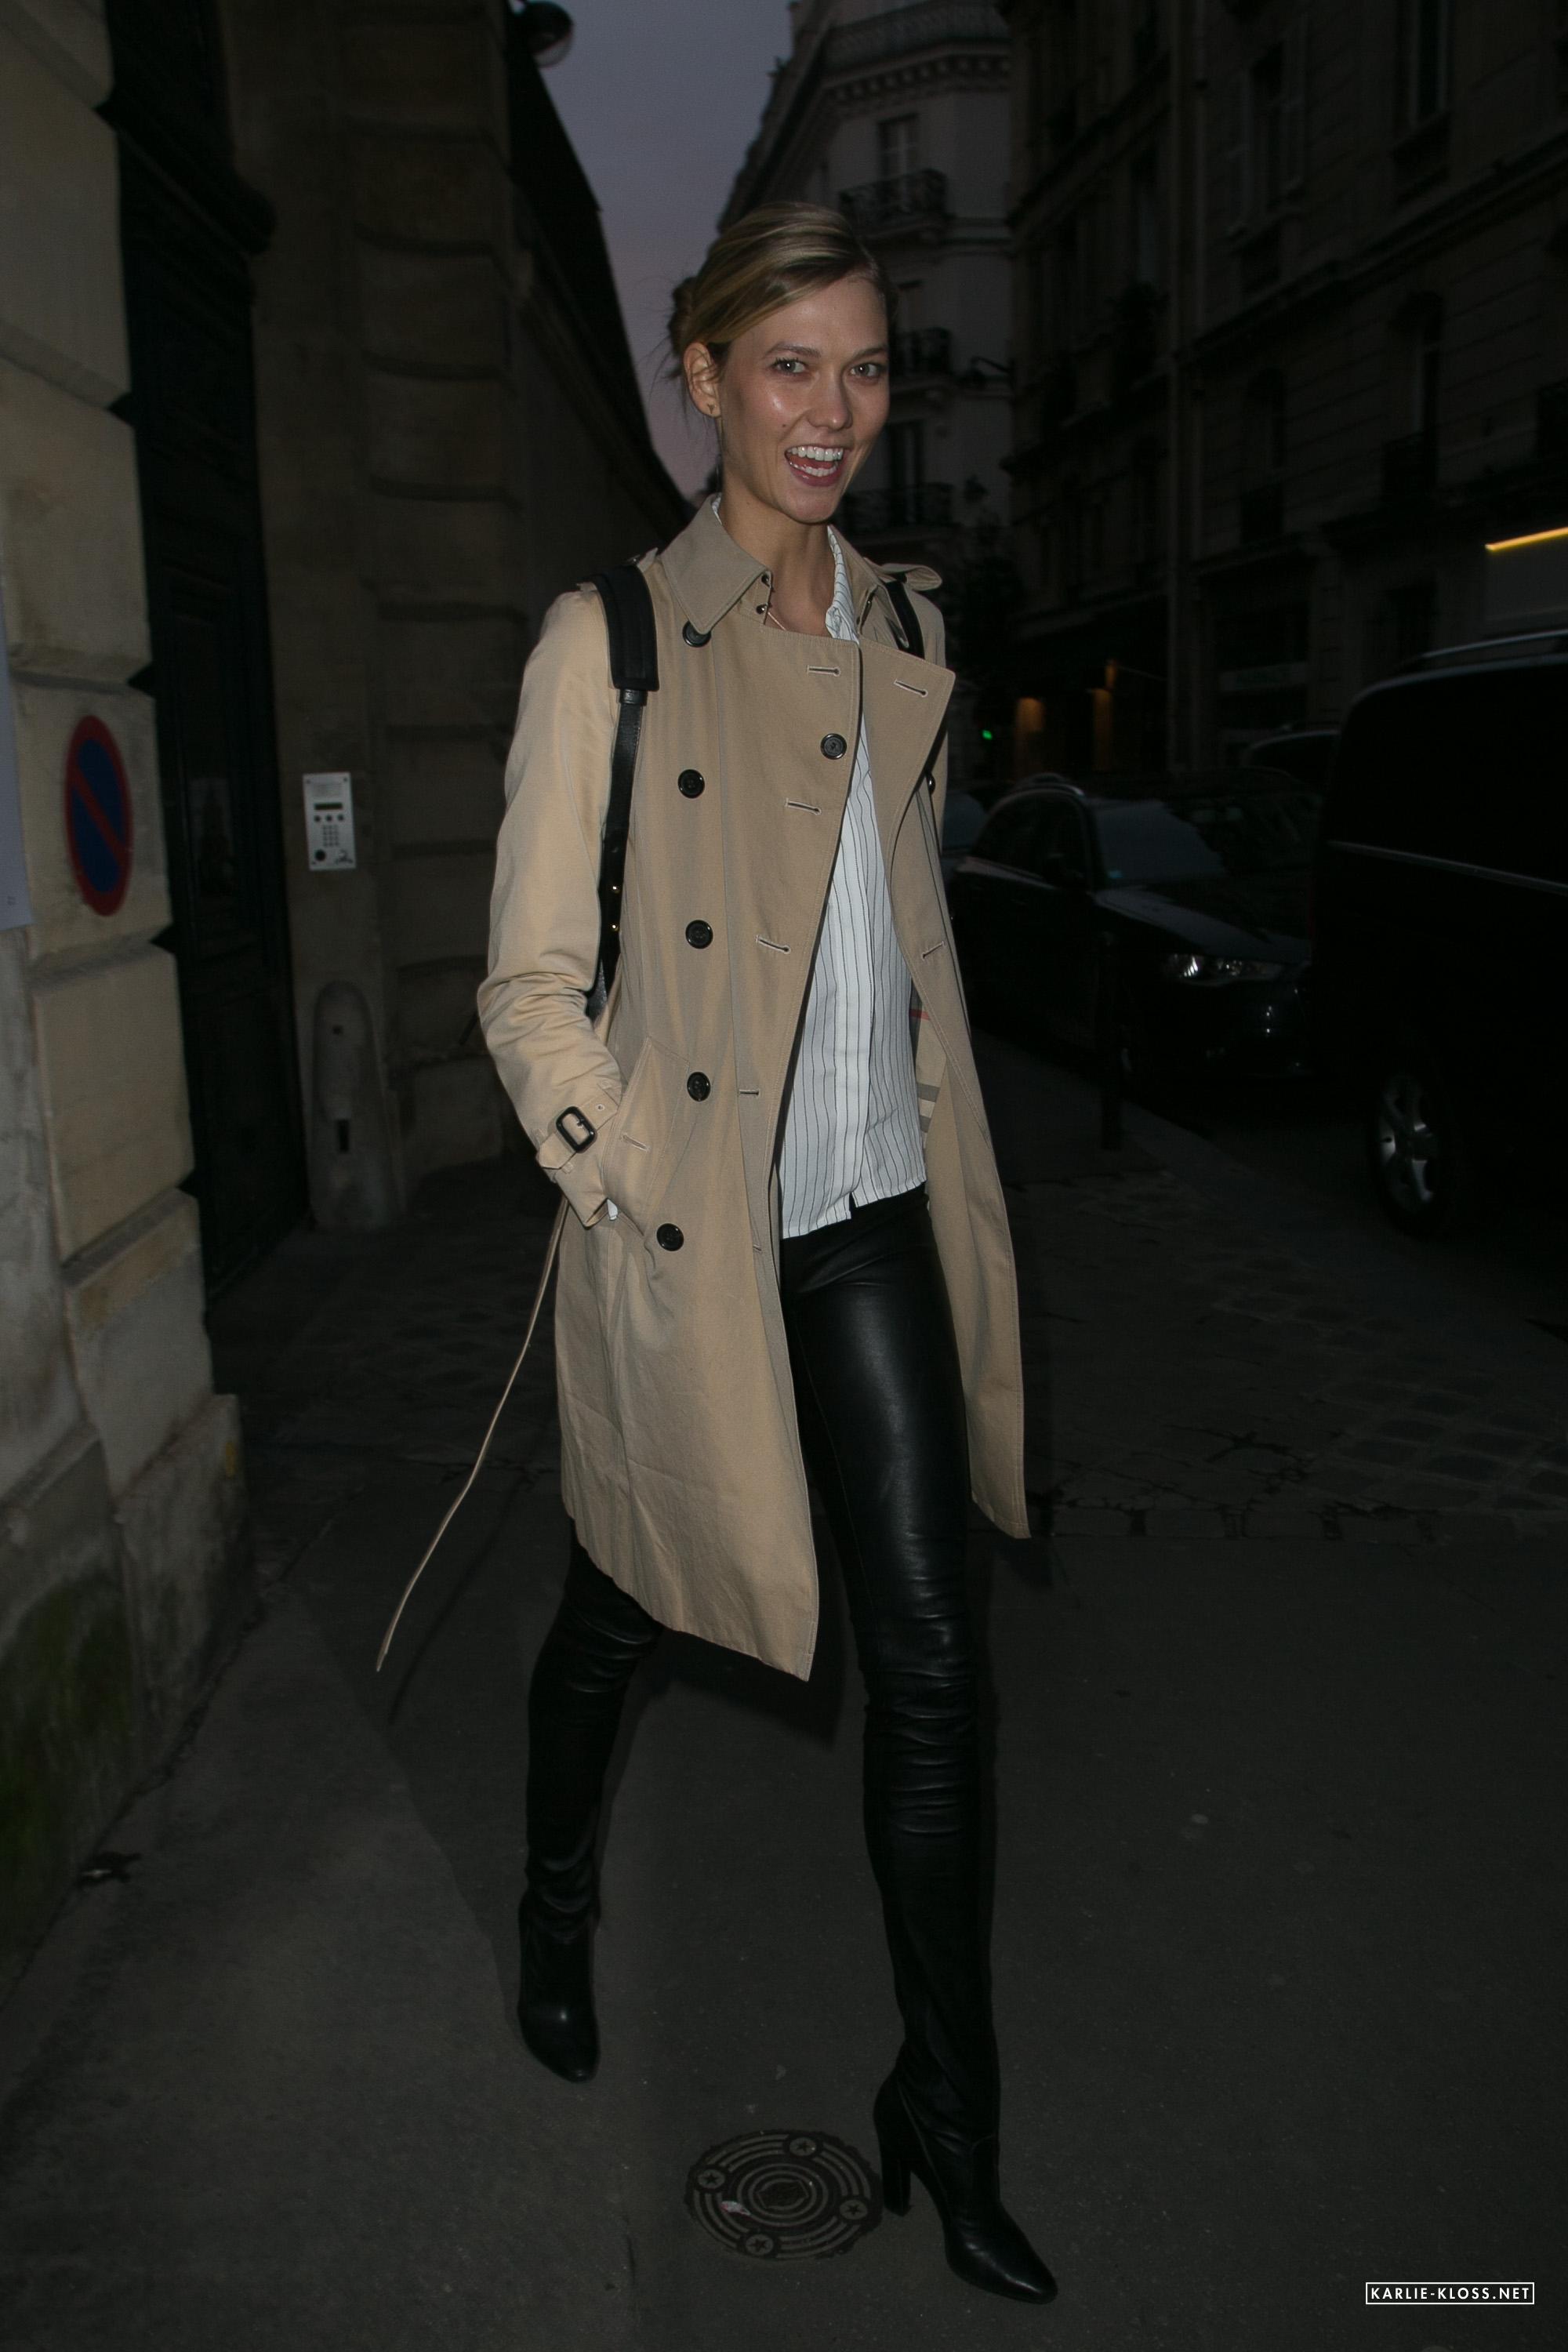 Karlie Kloss leaving Rehearsals In Paris